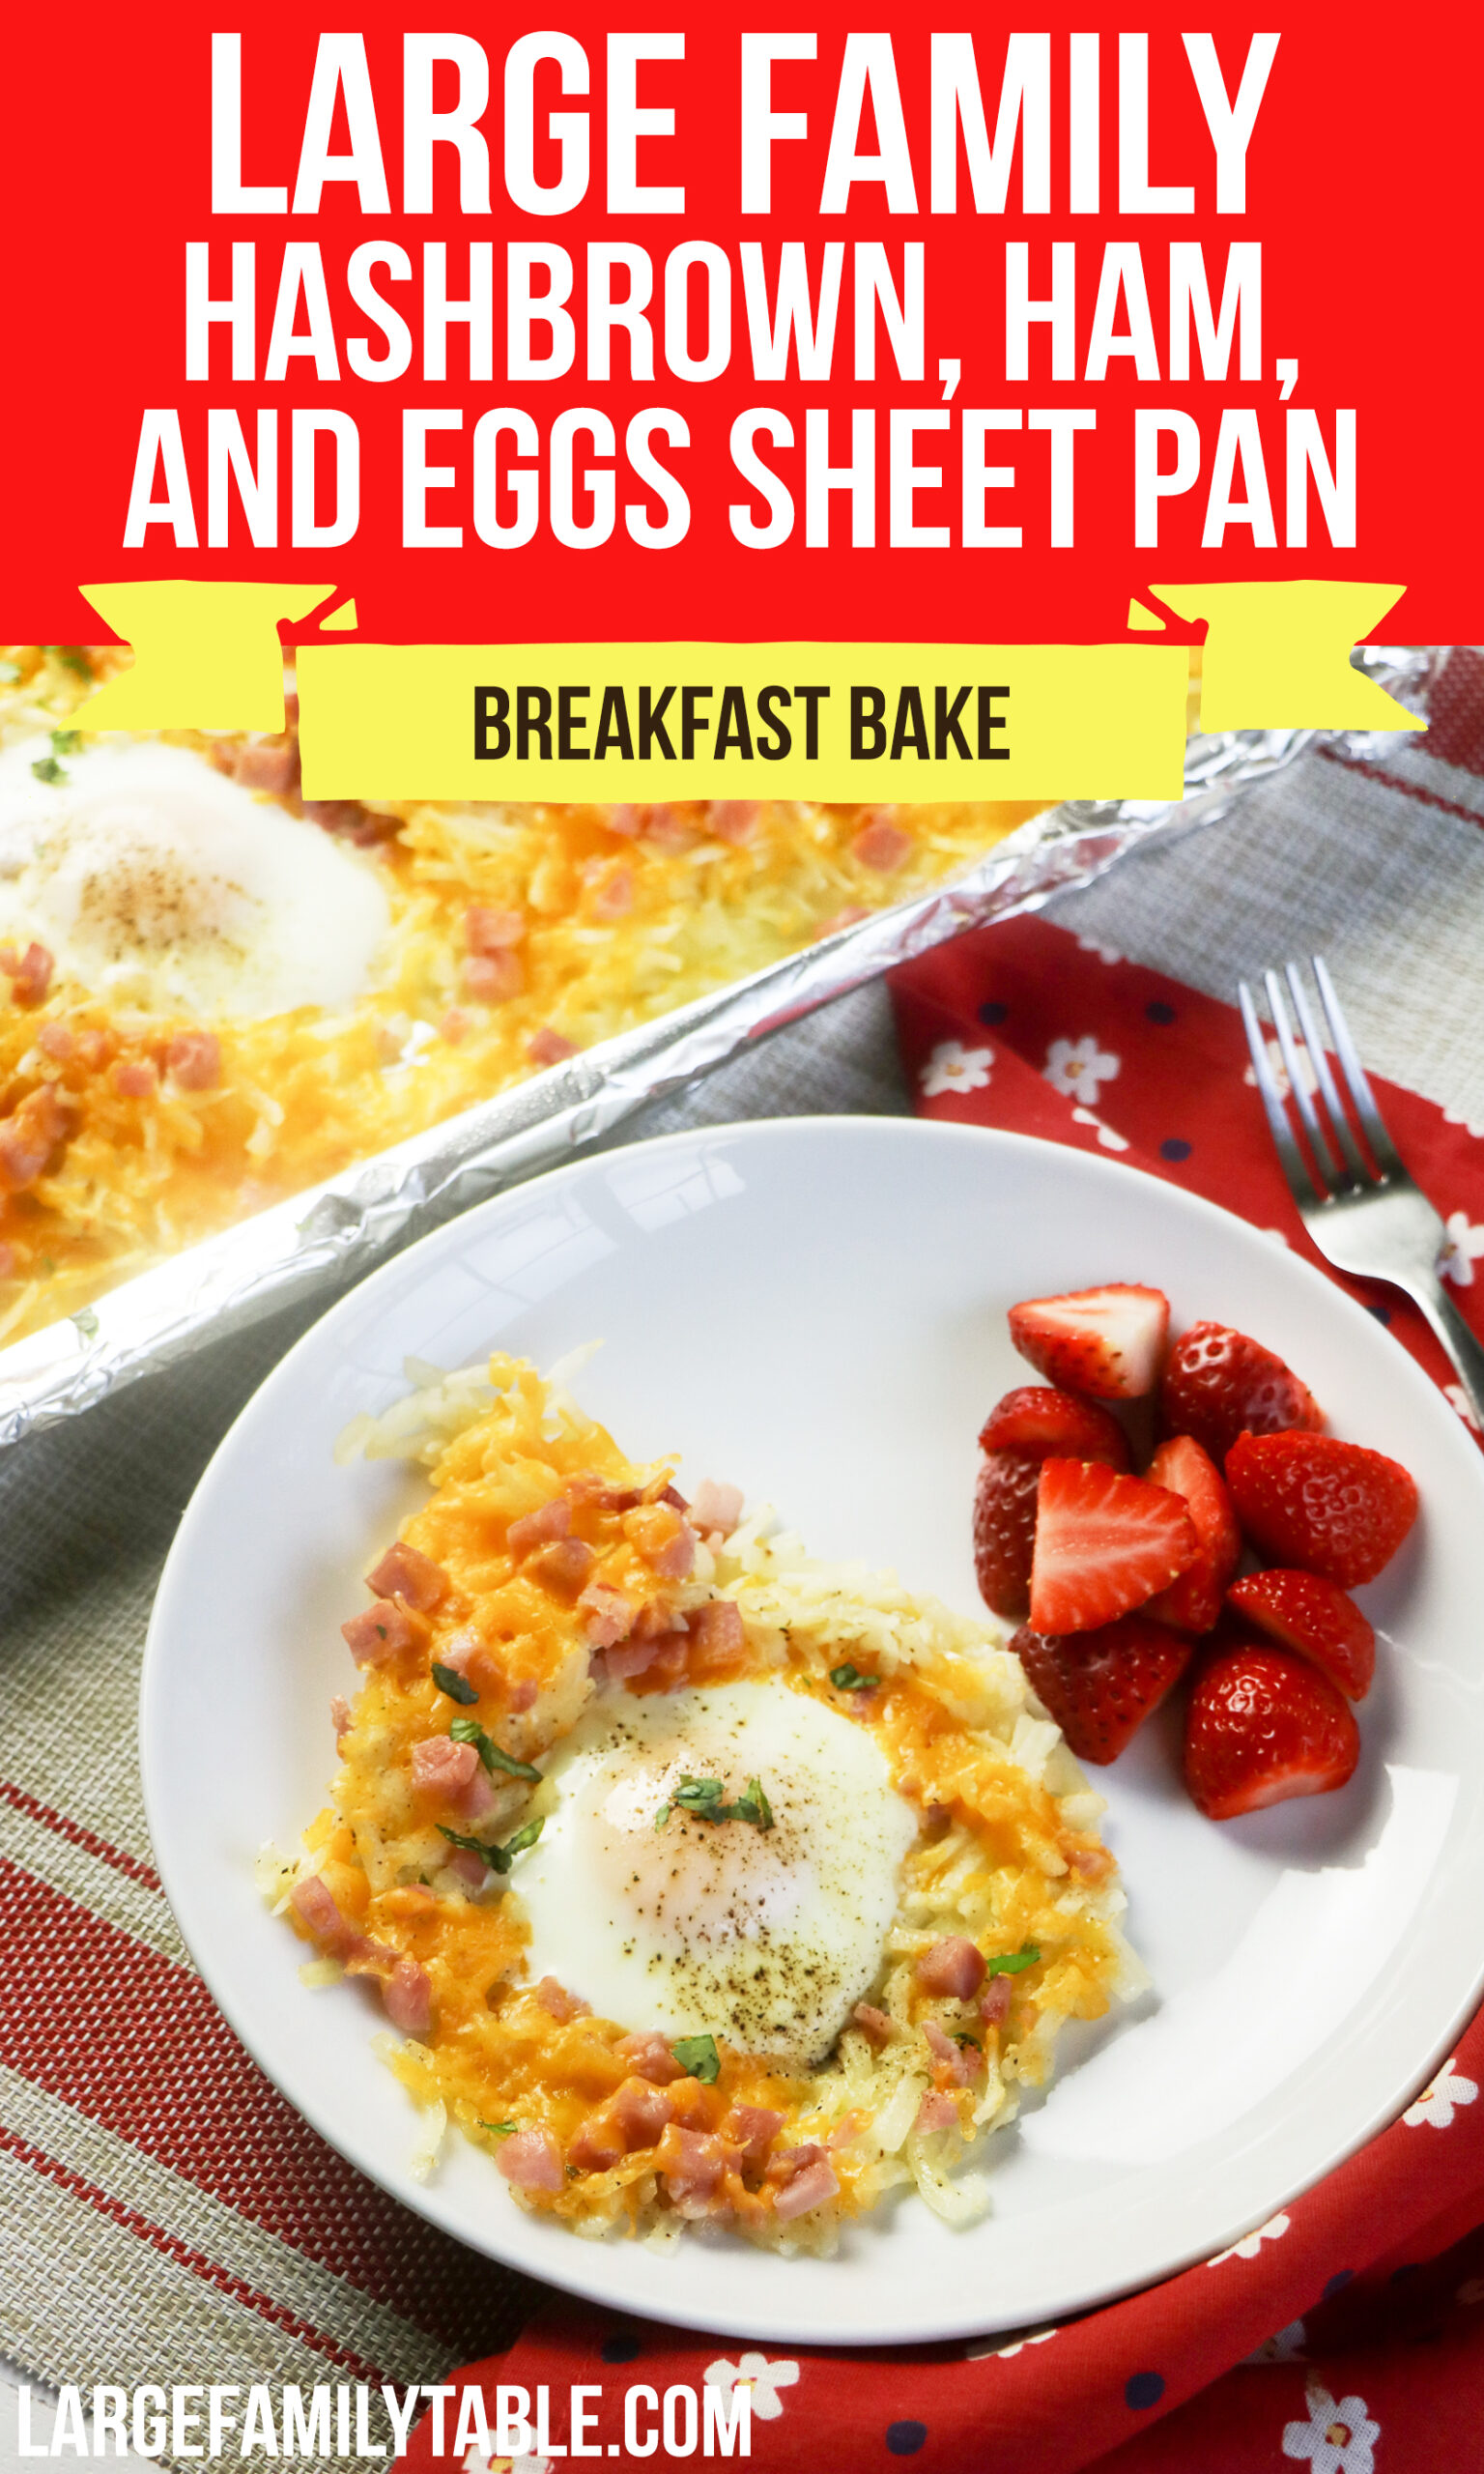 Large Family Hashbrown Ham and Eggs Sheet Pan Breakfast bake